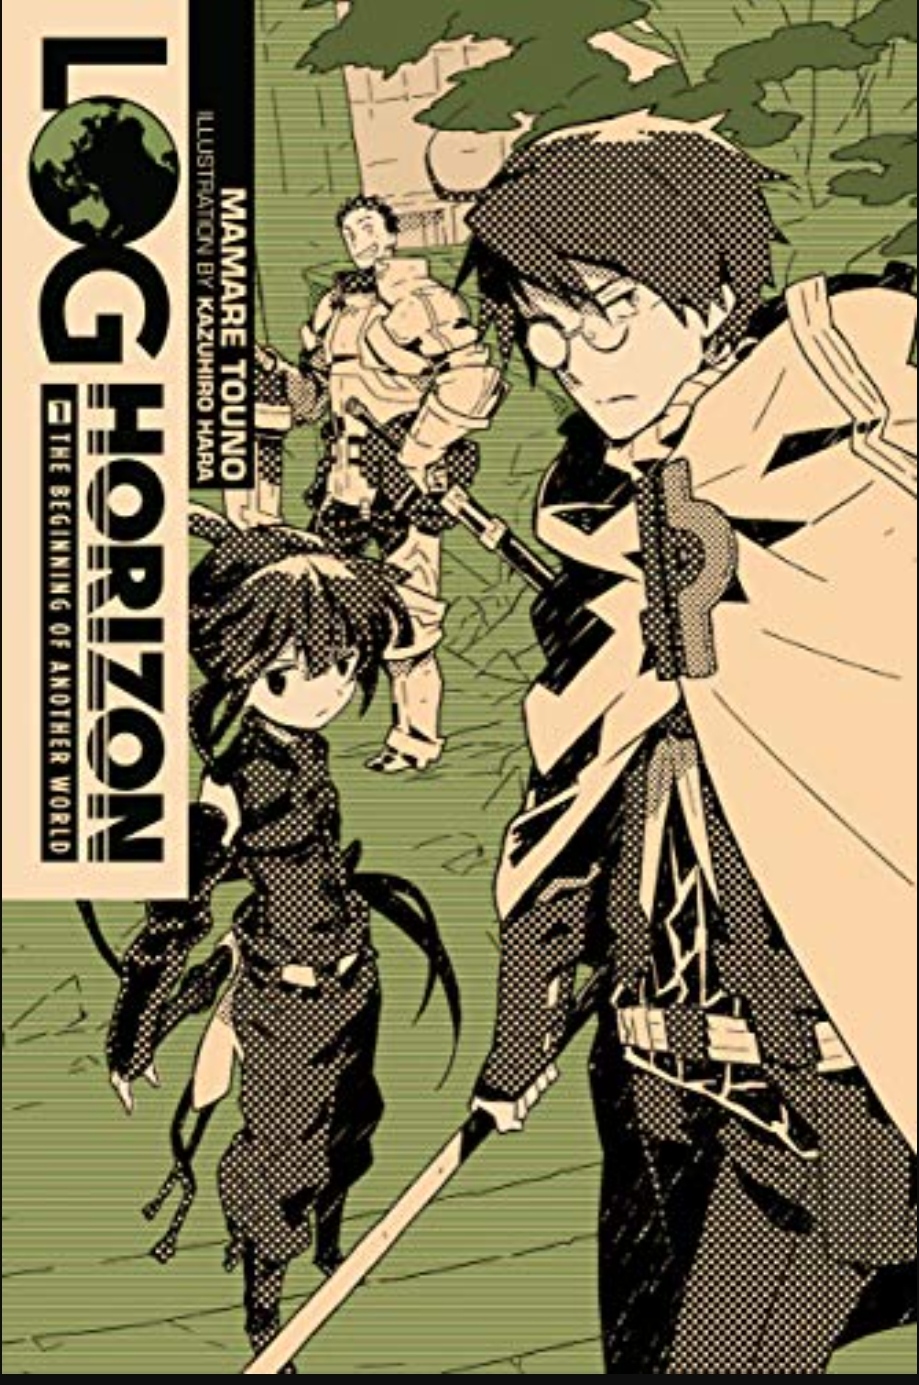 LOG HORIZON - As 10 principais séries de light novels isekai